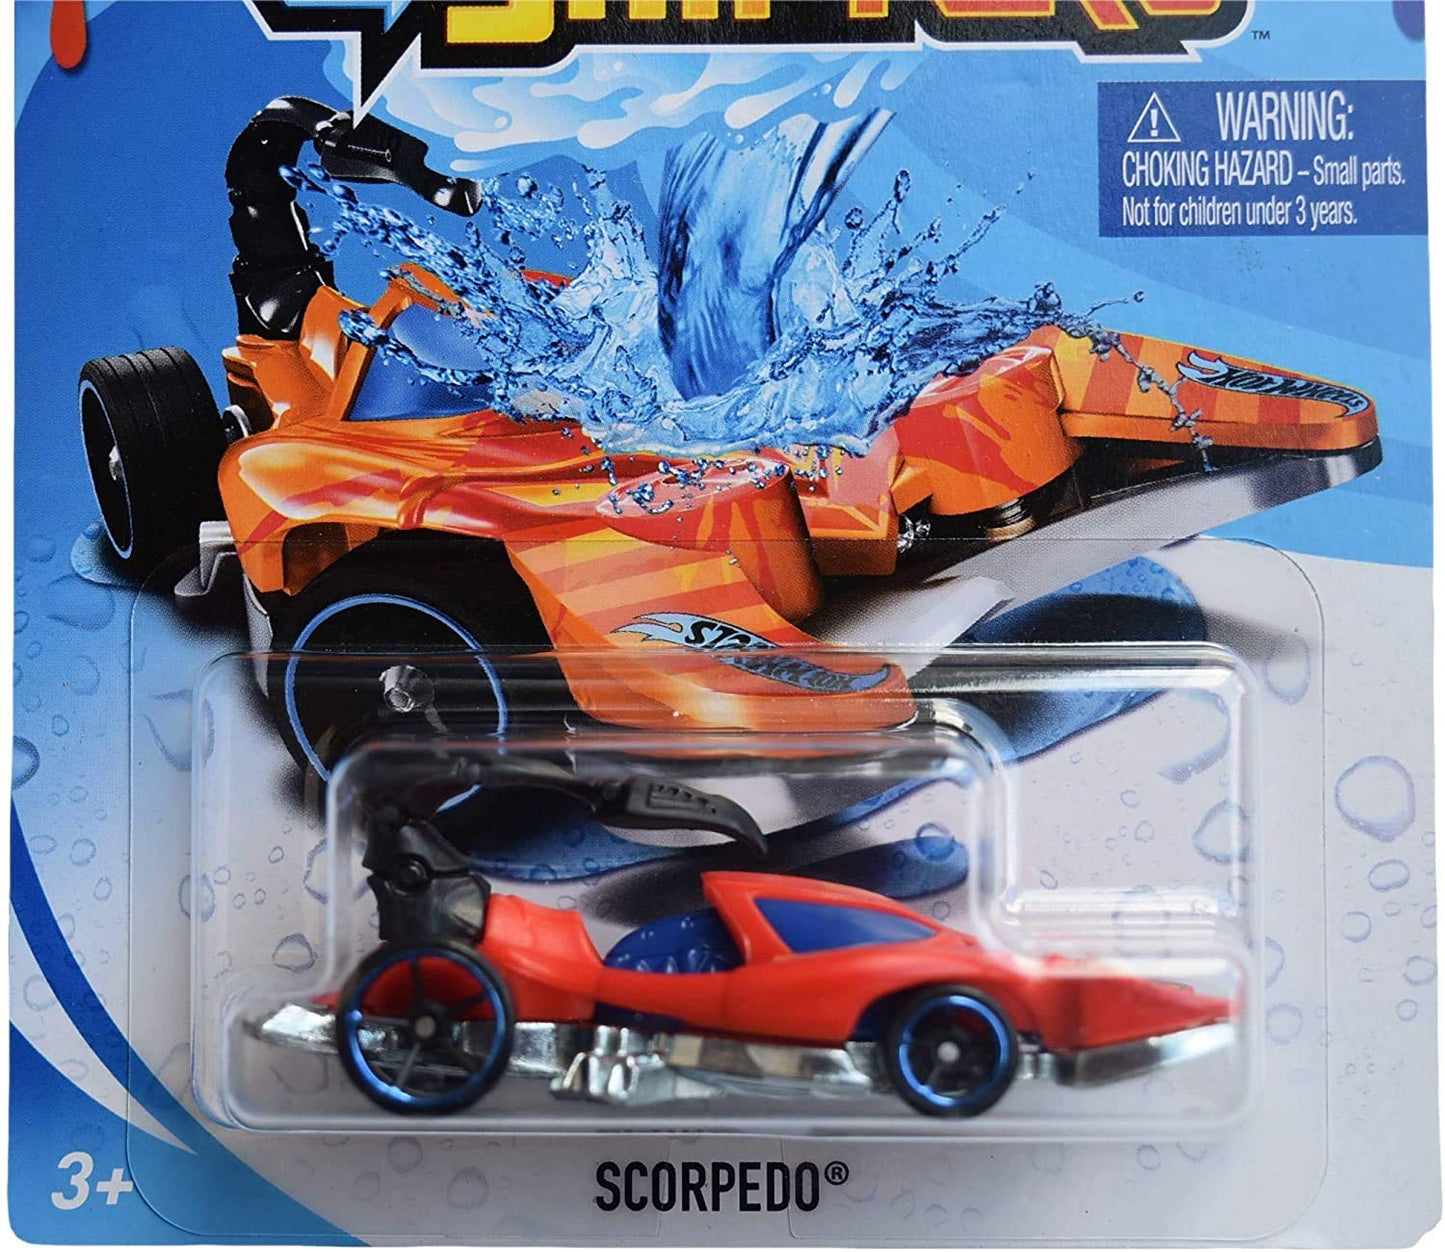 Hot Wheels Color Shifters Scorpedo Orange GKC20